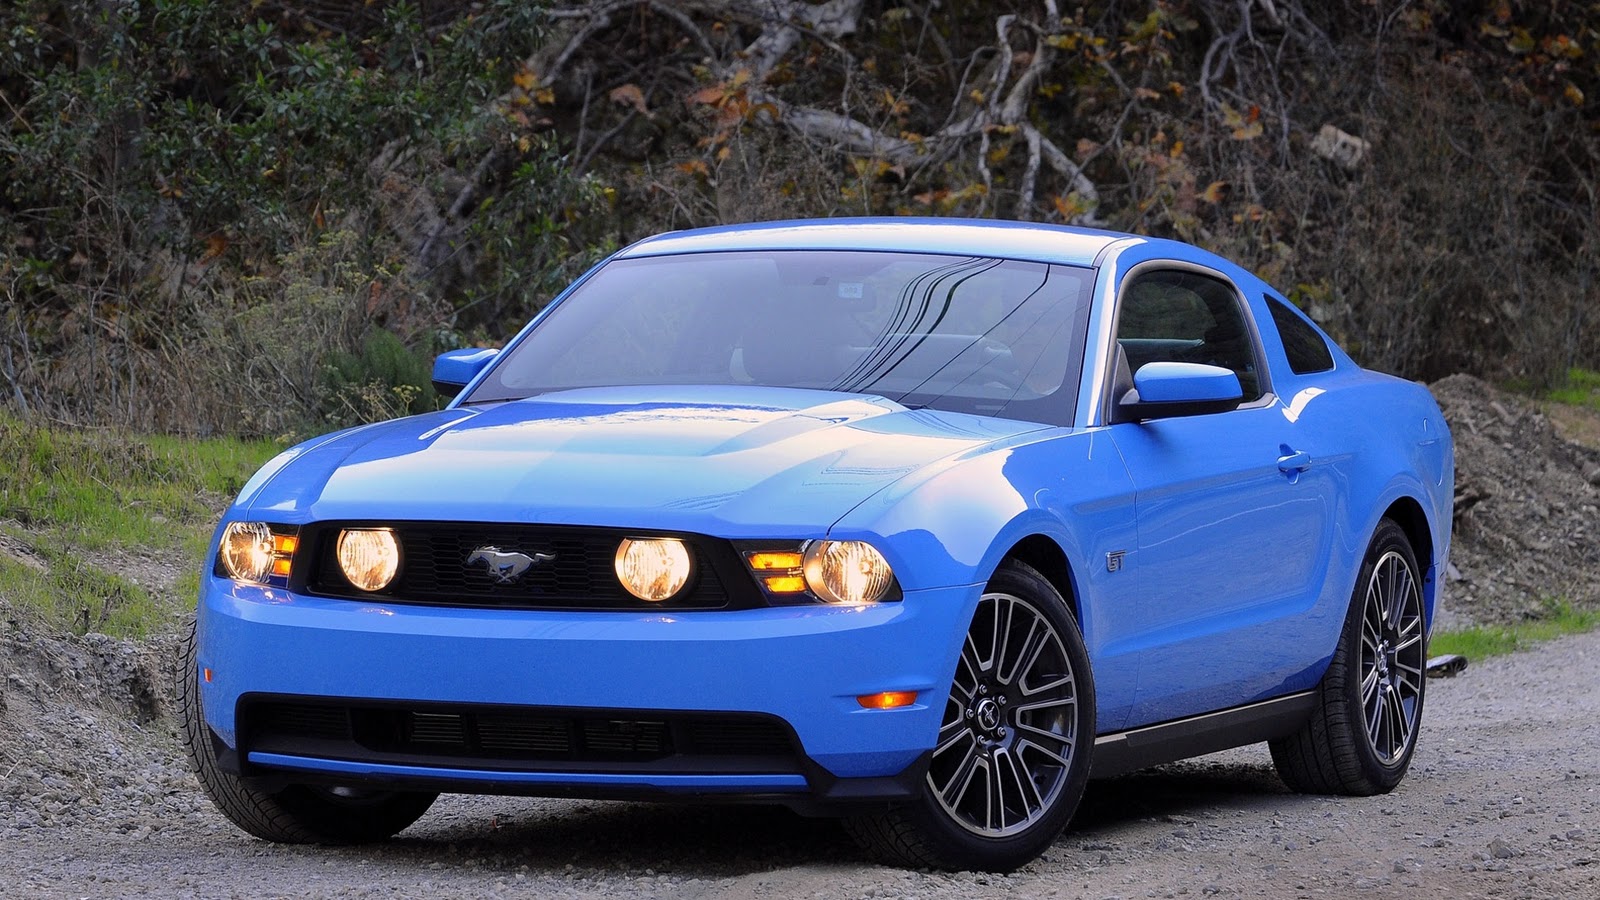 Ford Mustang desktop wallpapers | Full HD Wallpapers 2015